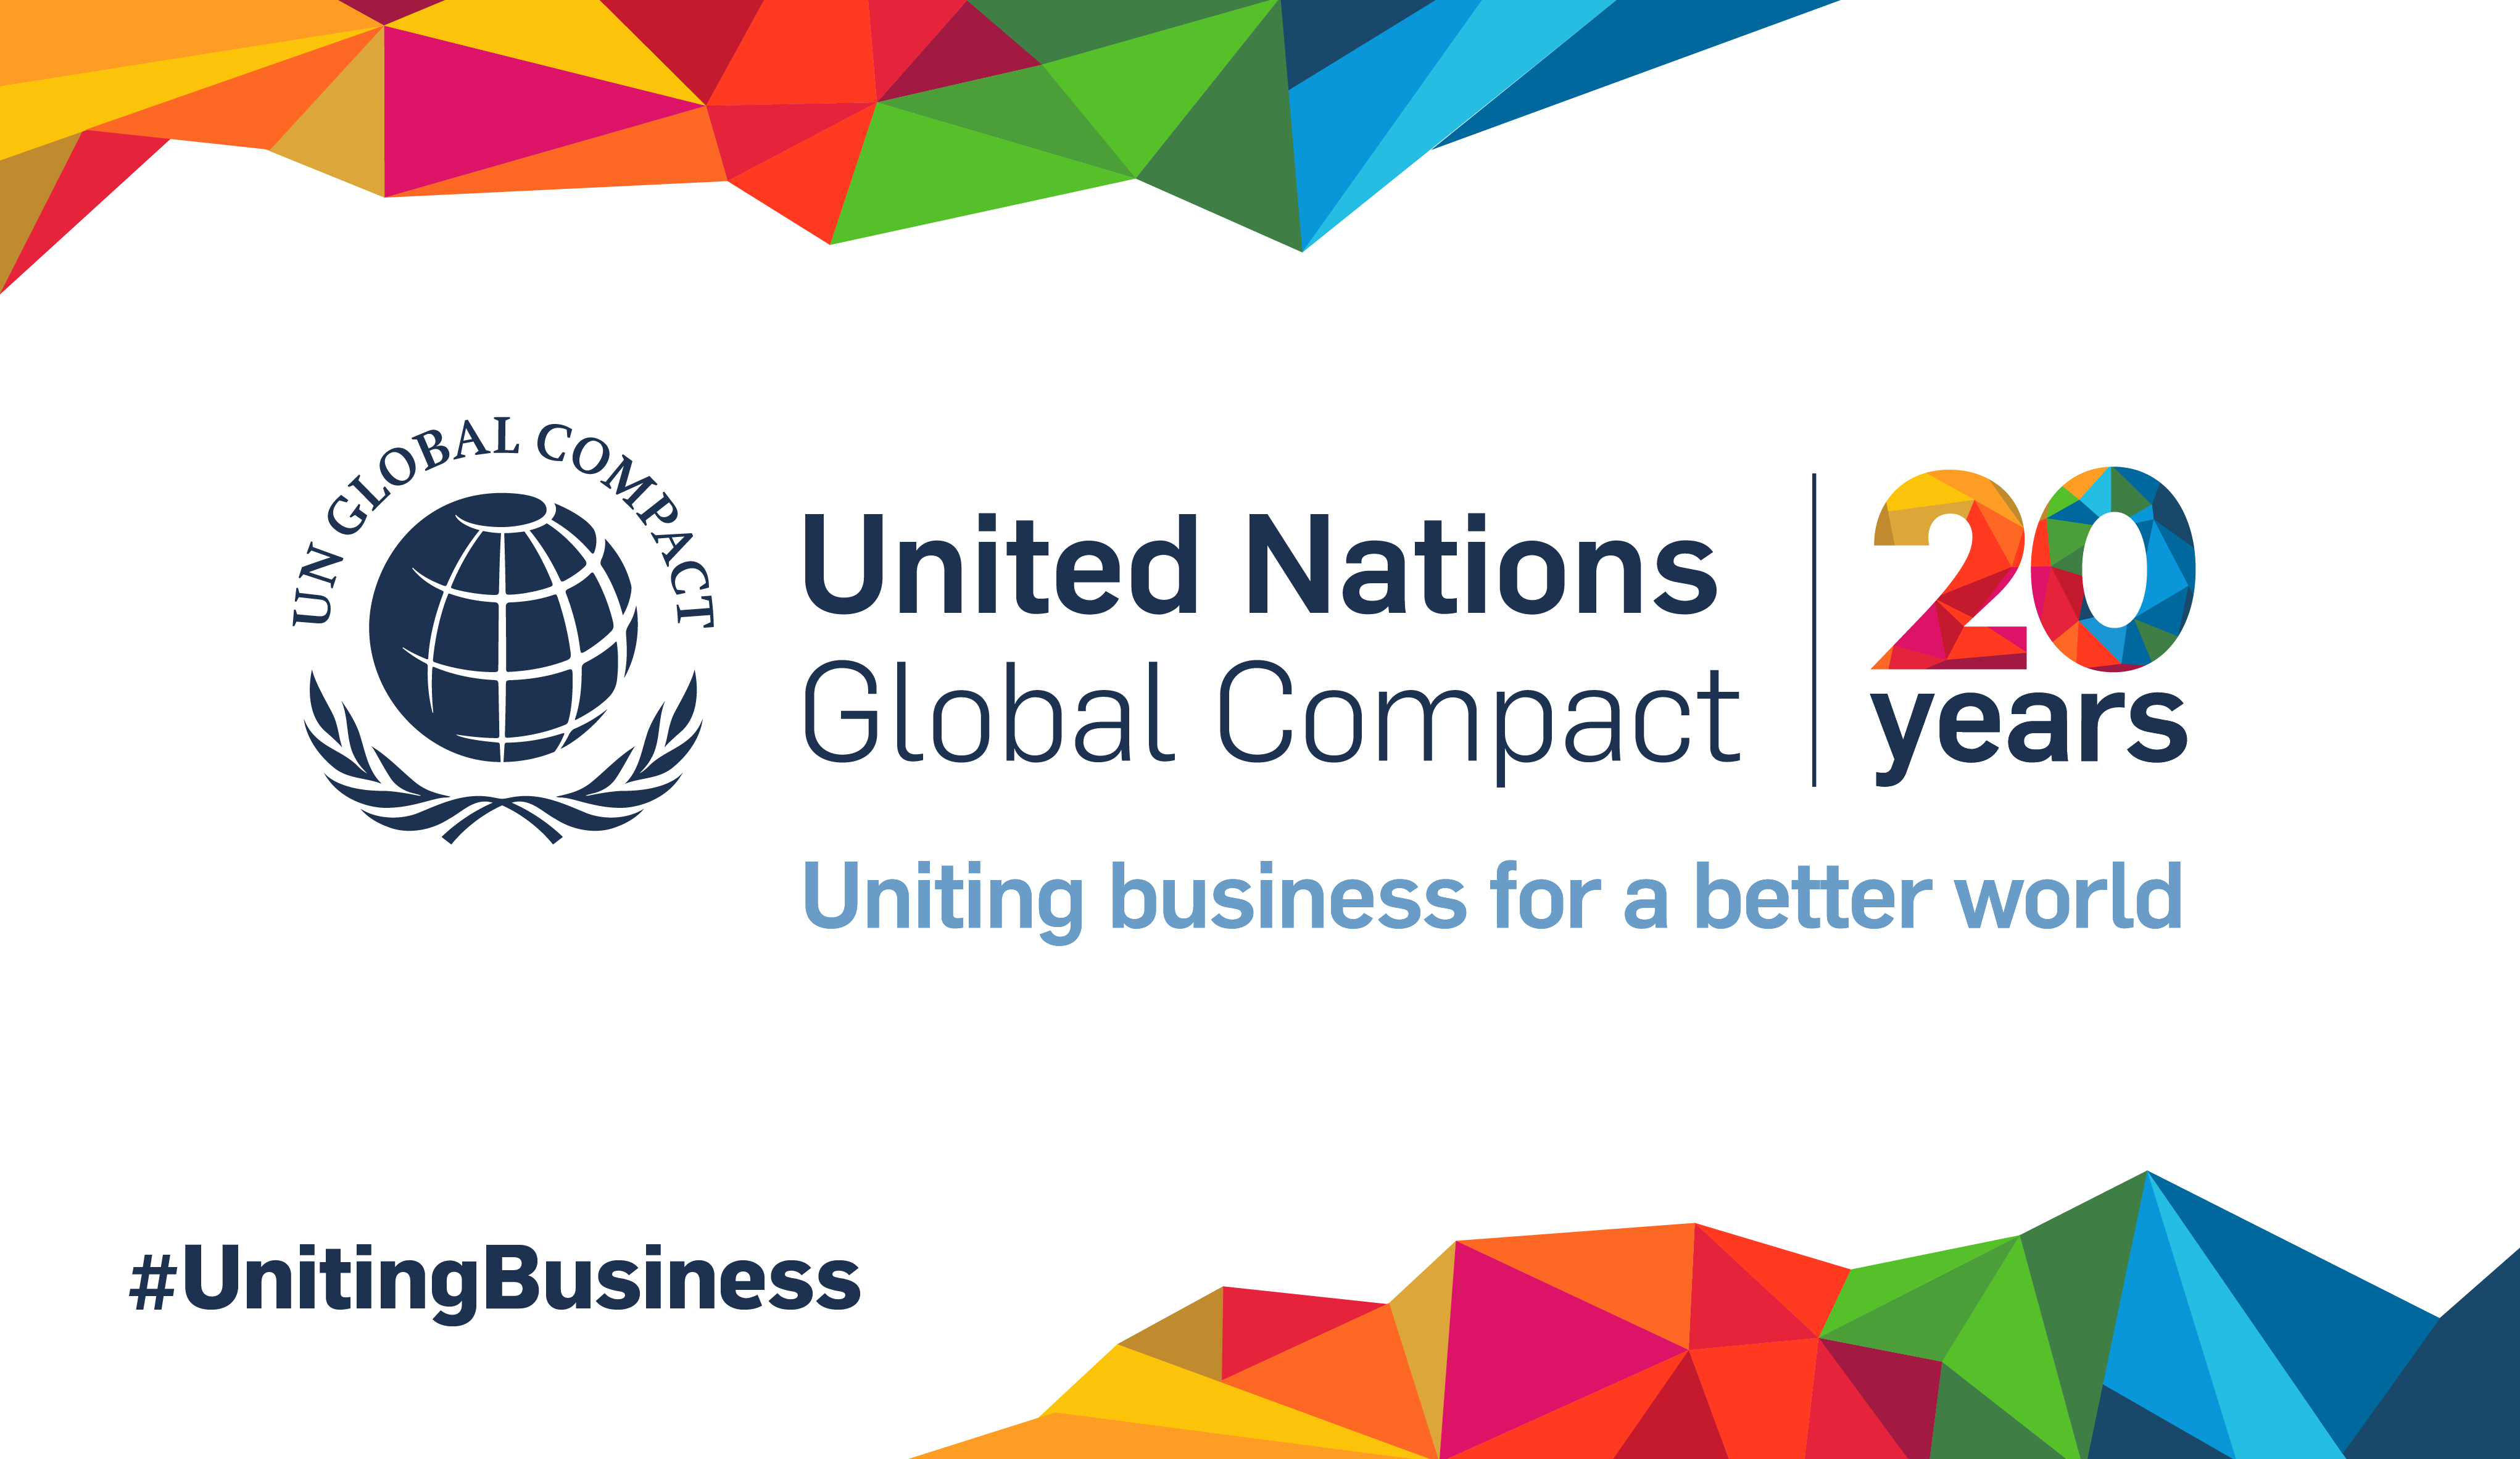 UPM on nimetty jälleen Global Compact LEAD -jäseneksi tunnustuksena vastuullisesta liiketoiminnastaan.